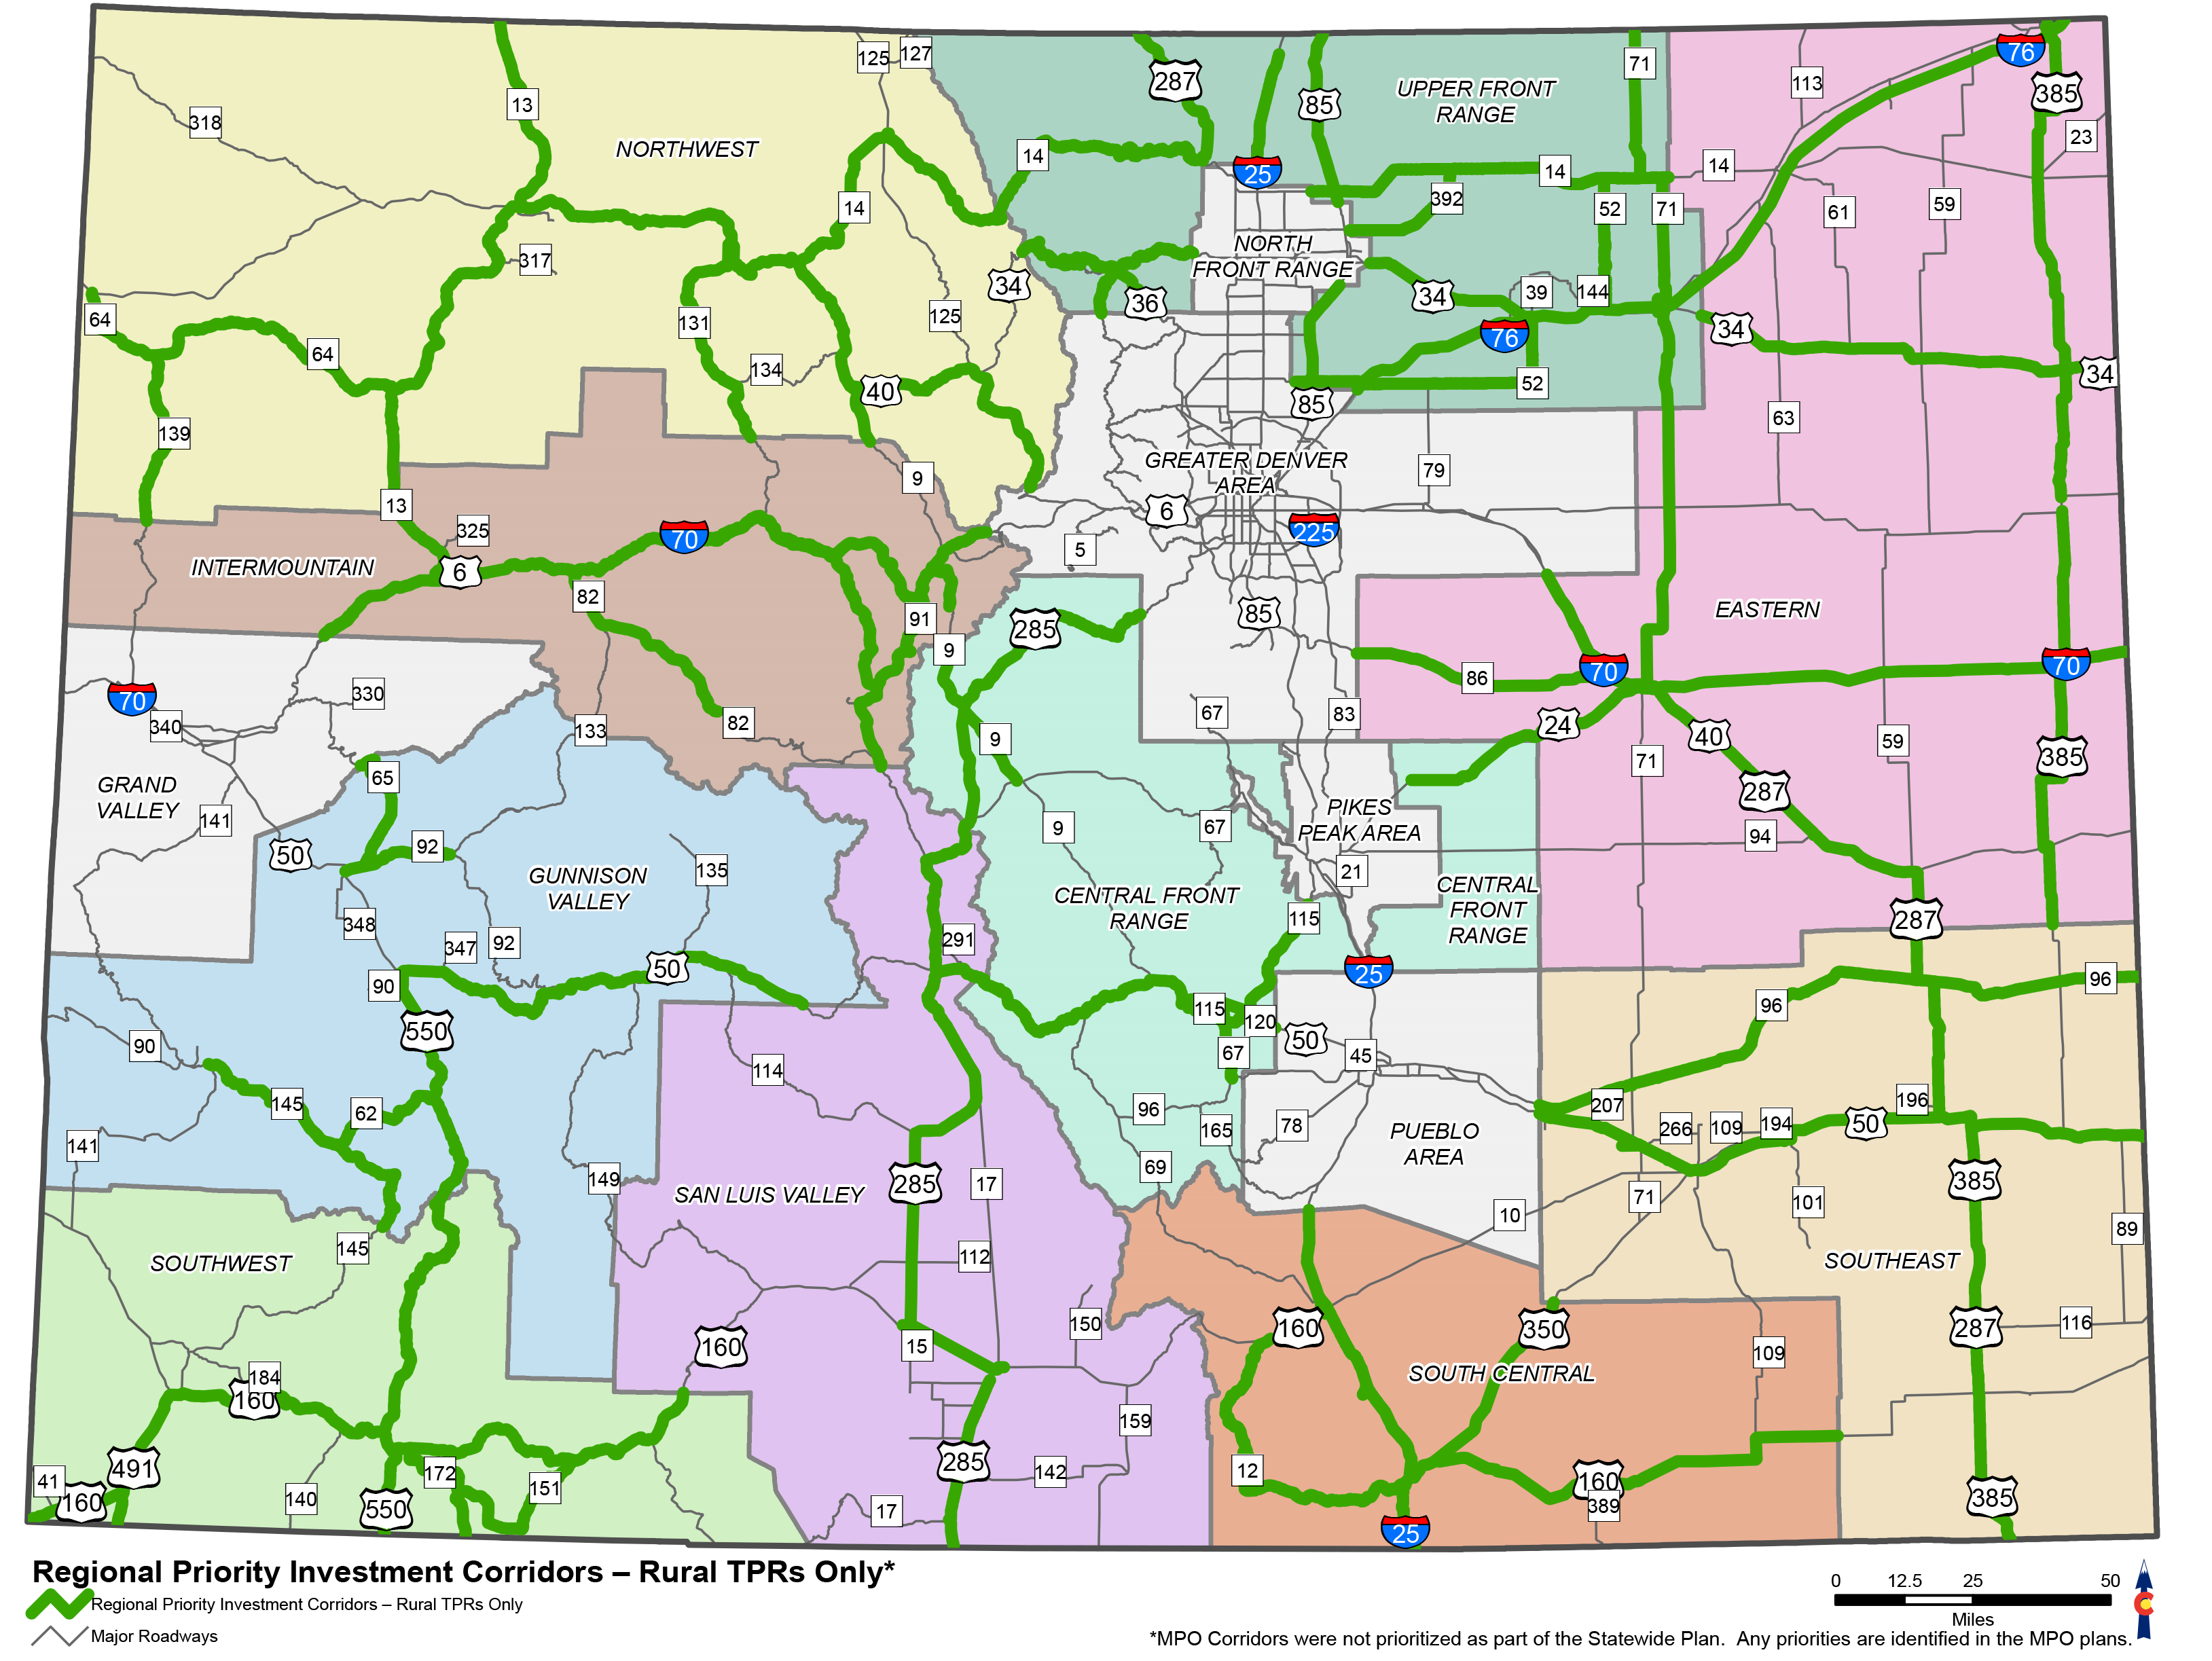 https://www.codot.gov/programs/colorado-transportation-matters/statewide-transportation-plans/statewide-transportation-plans